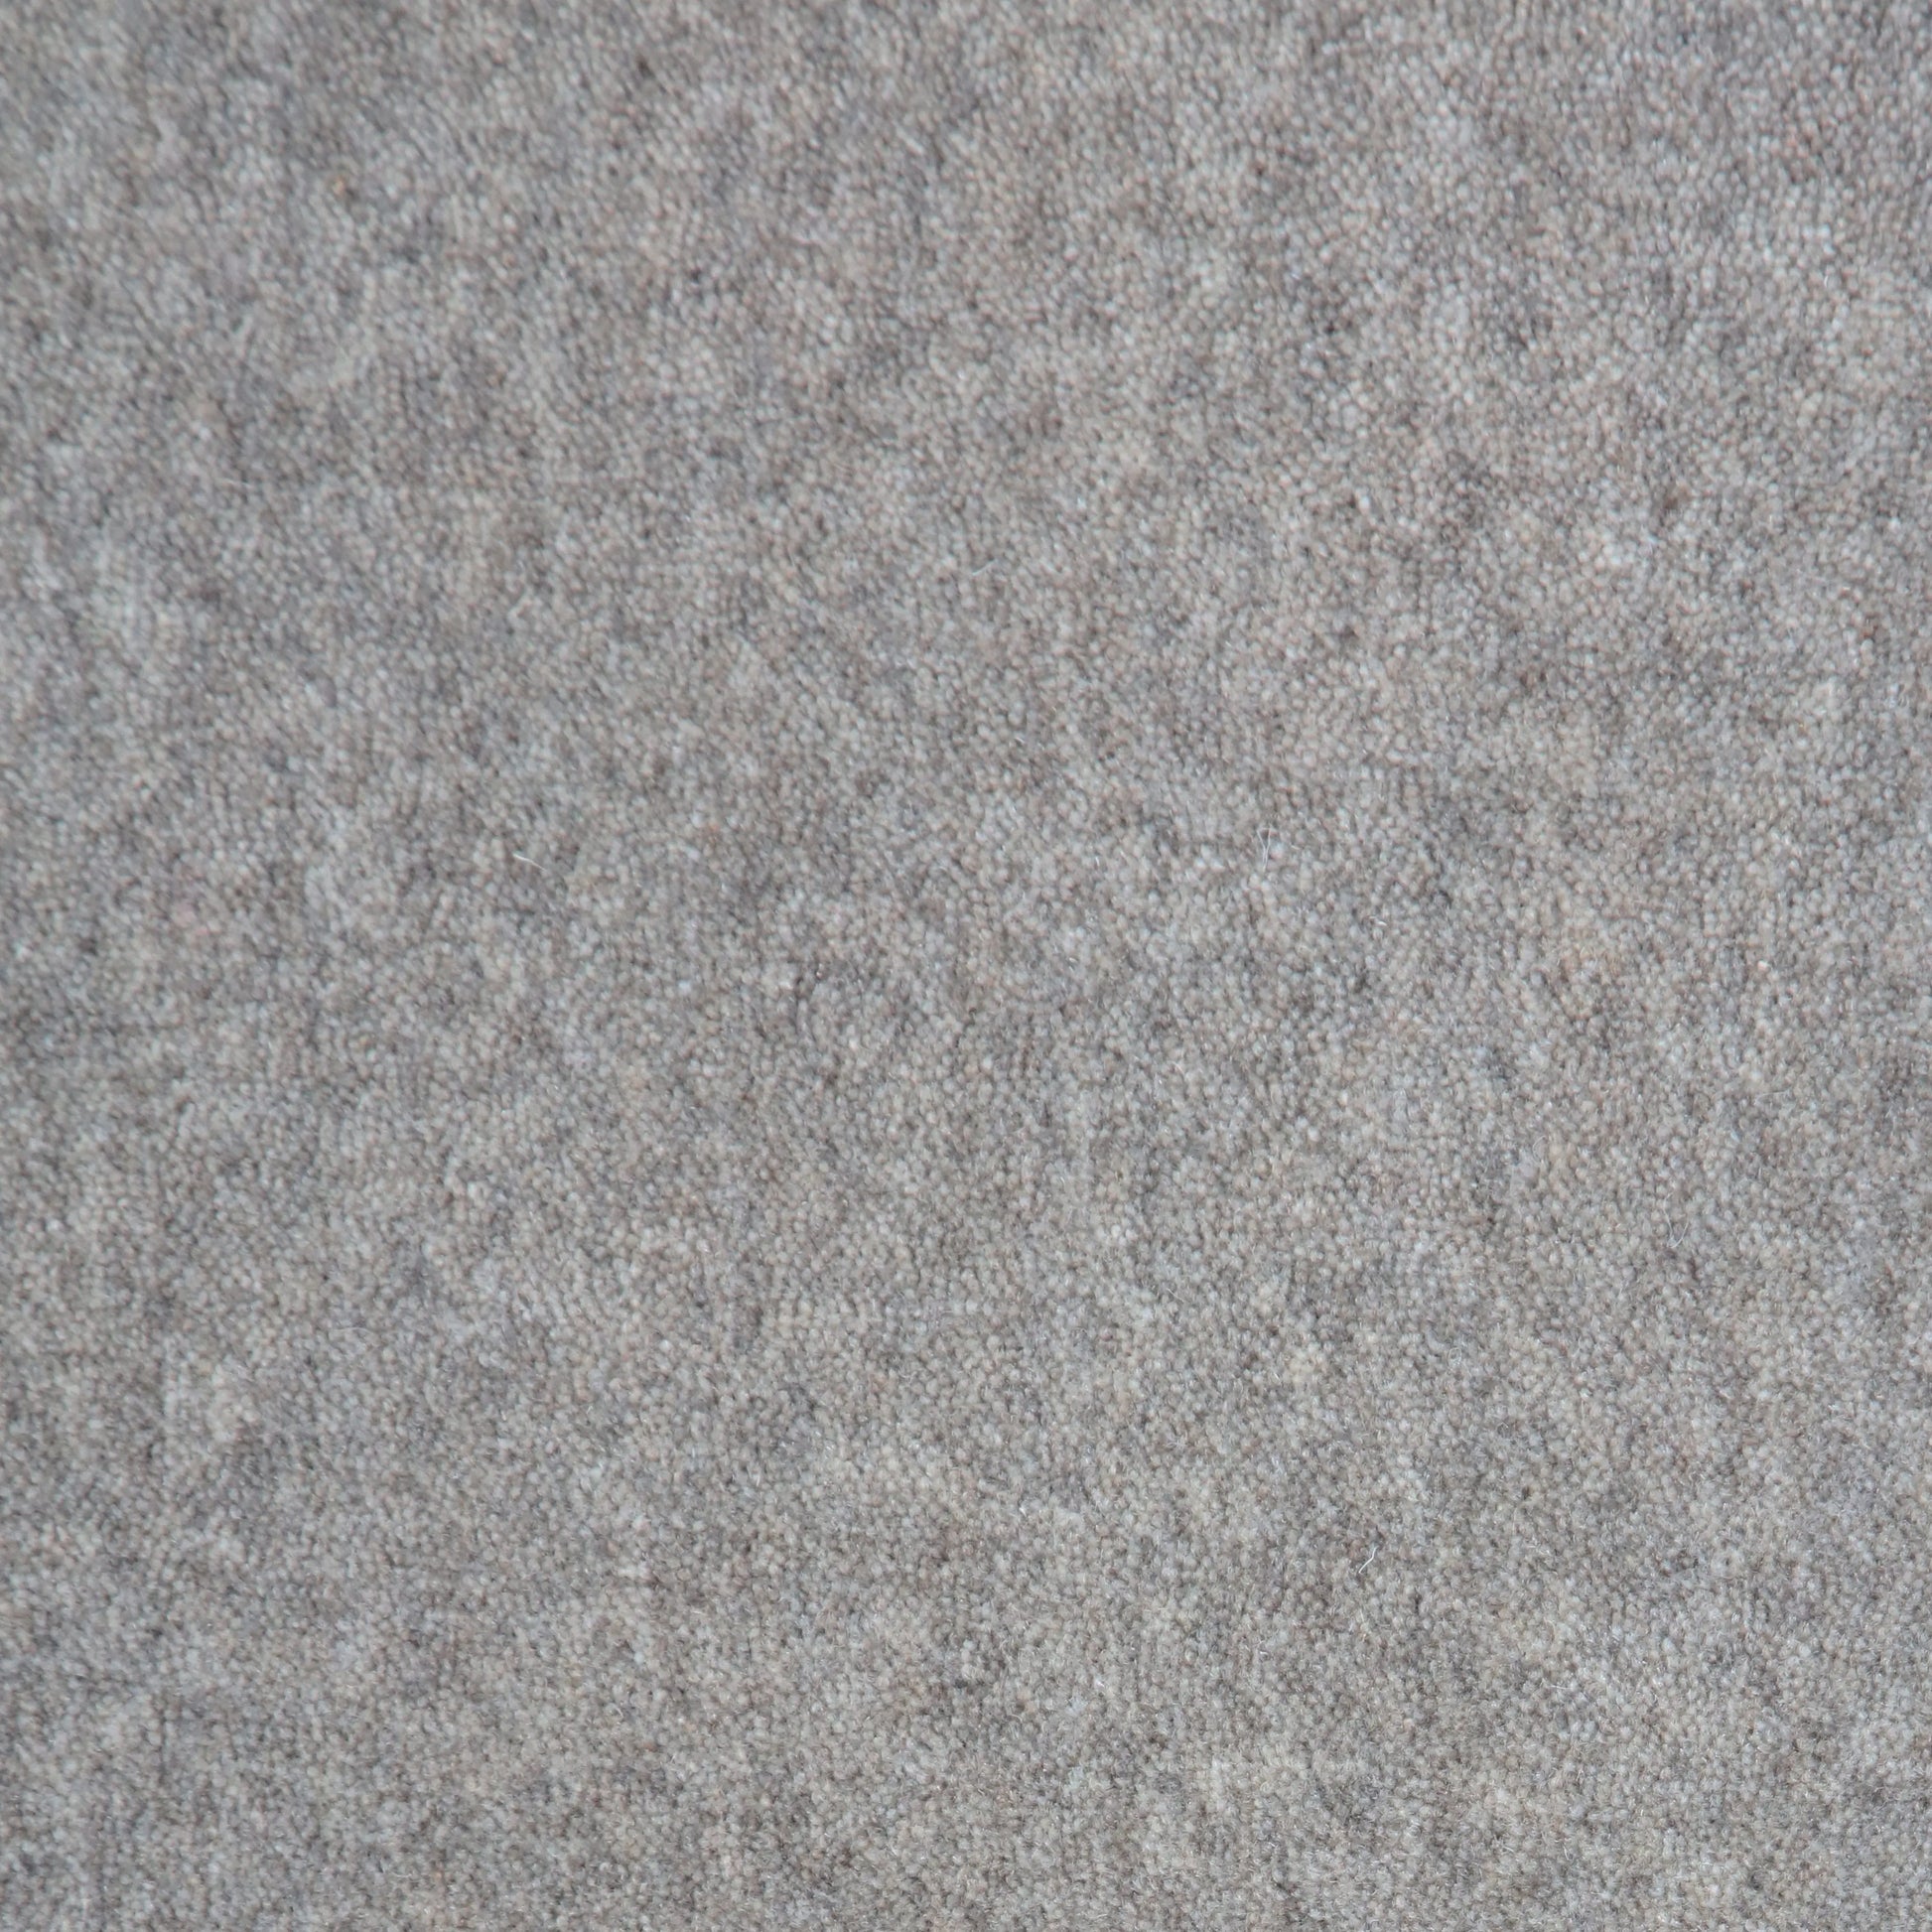 Cut Pile Marl Grey Wool Carpet